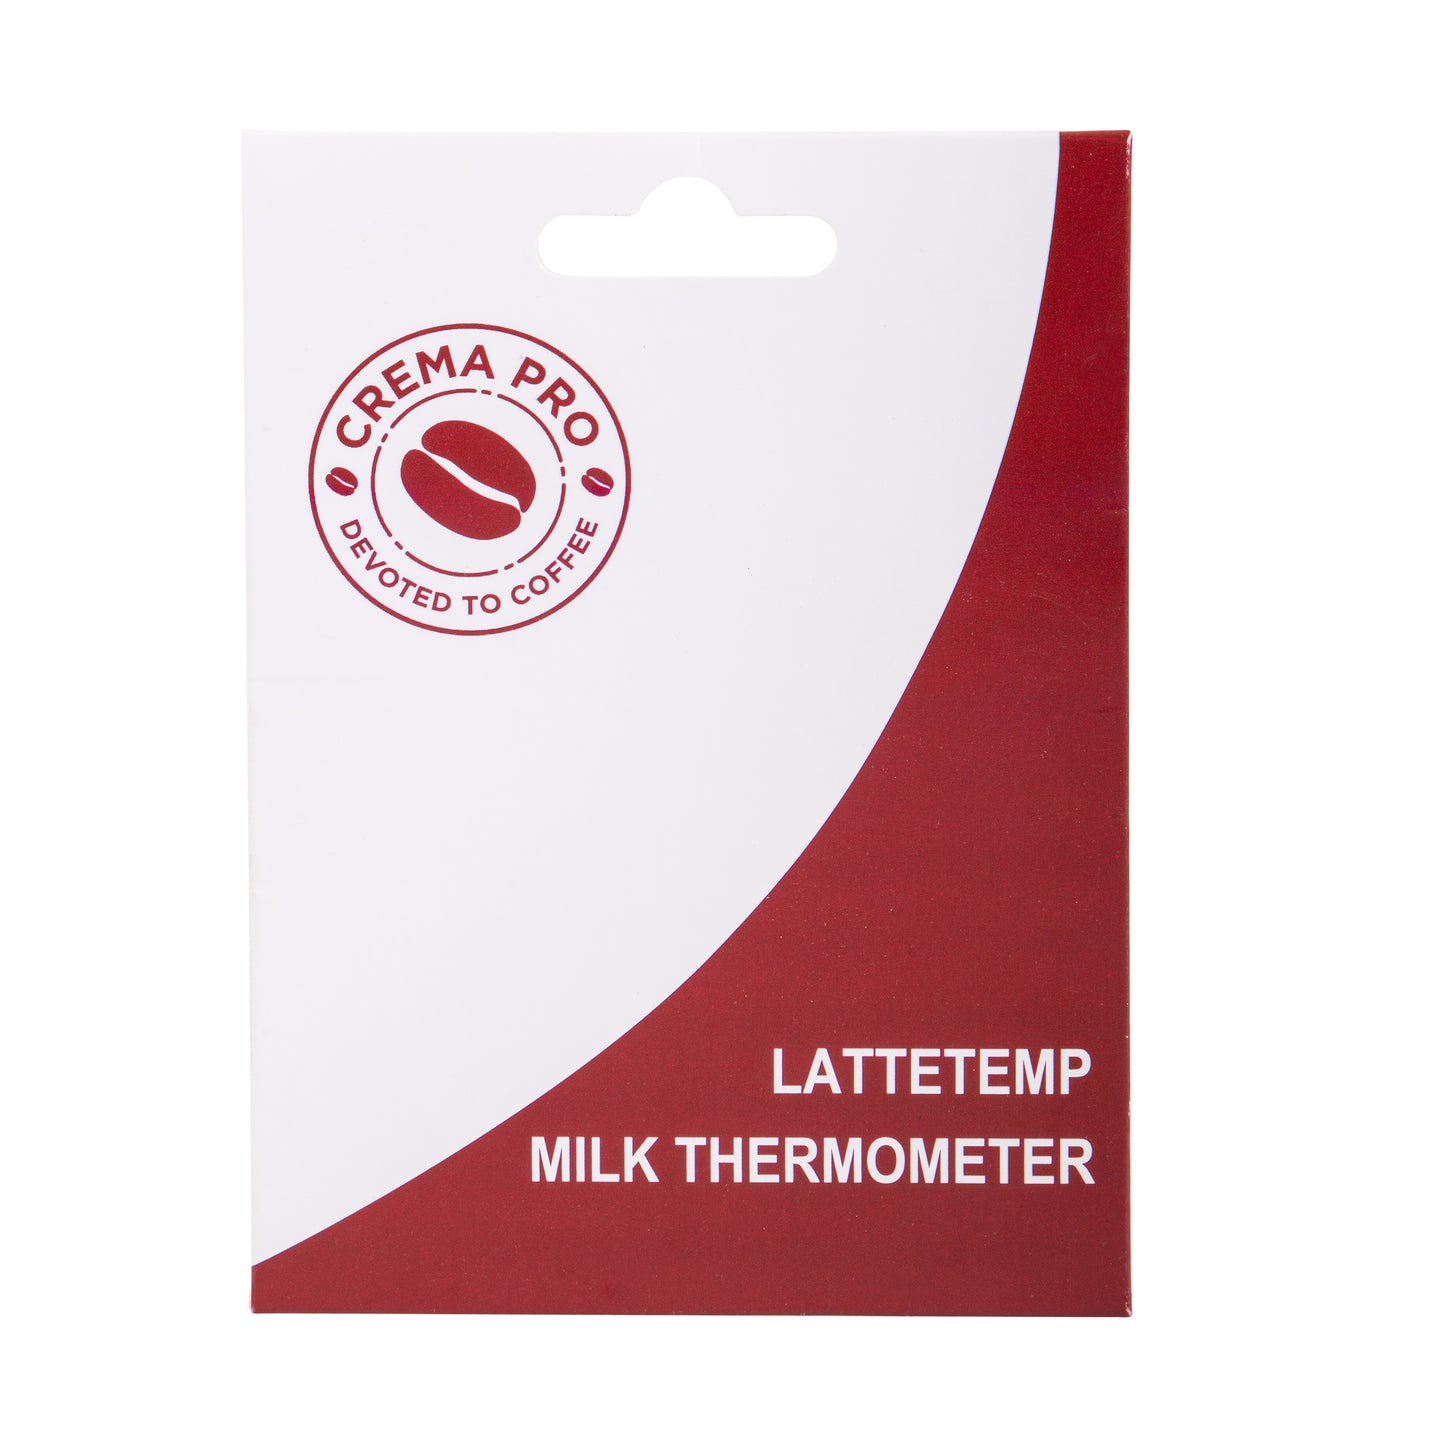 "Lattetemp" Milk Thermometer